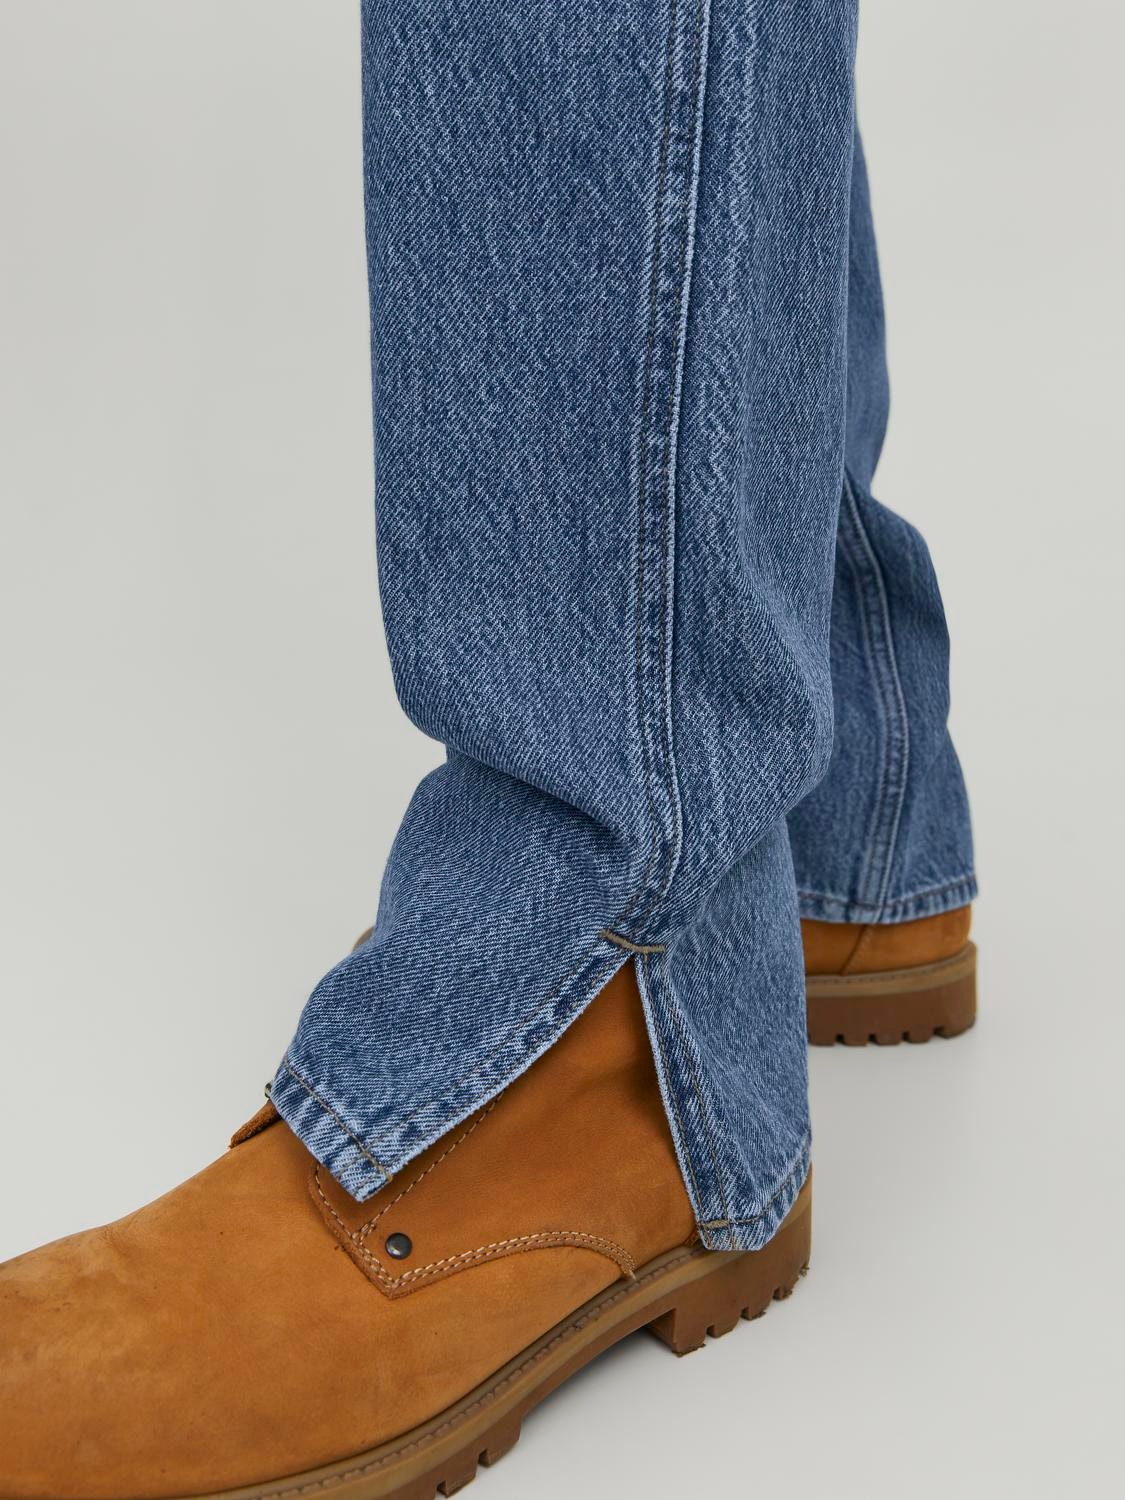 Jack & Jones JJICHRIS JJUTILITY SBD 301 W. SLIT Jeans relaxed fit -Blue Denim - 12250270